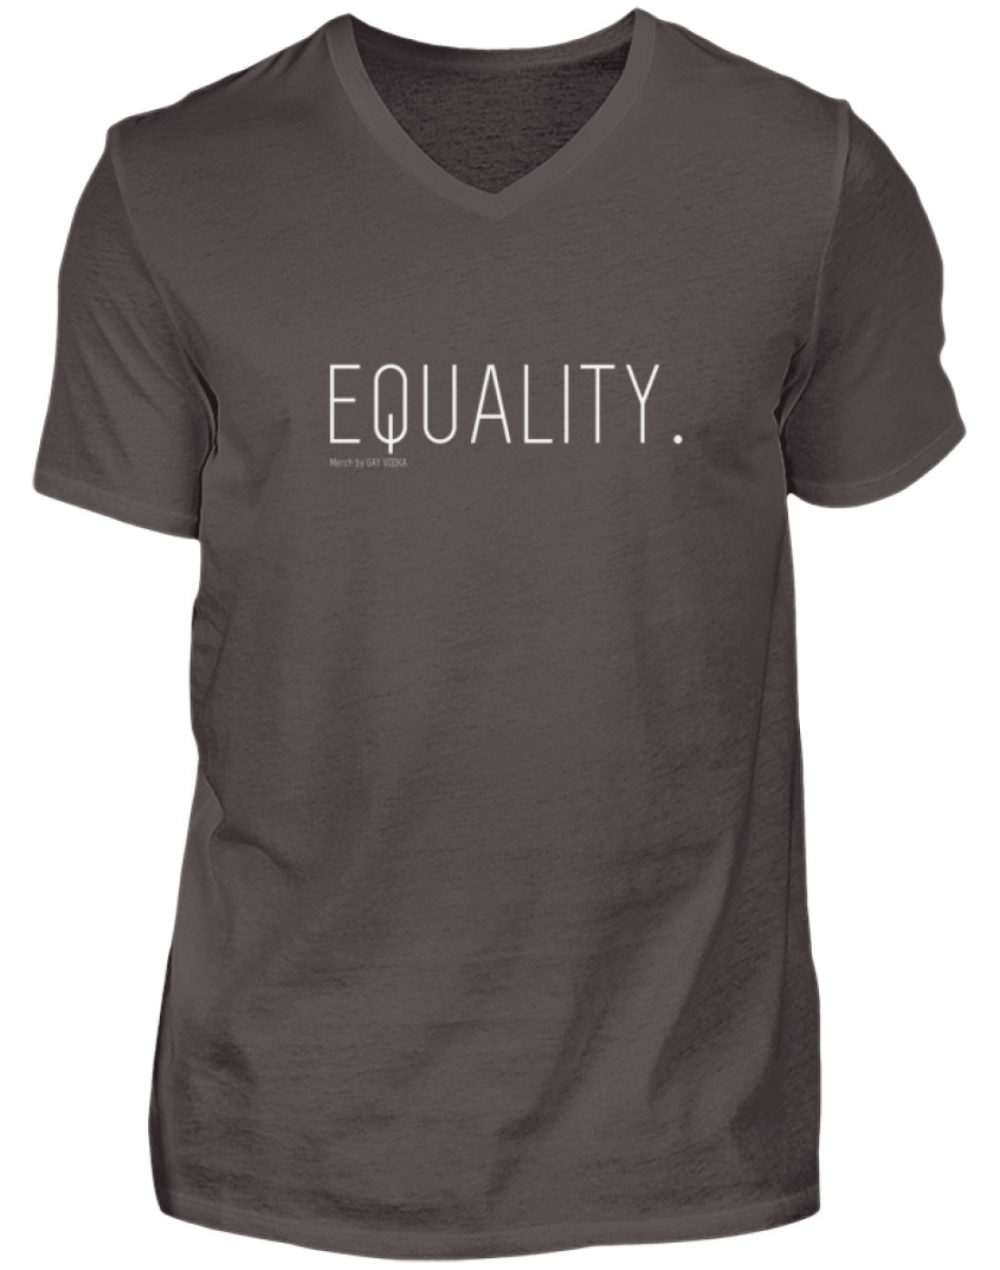 EQUALITY. - Herren V-Neck Shirt-2618